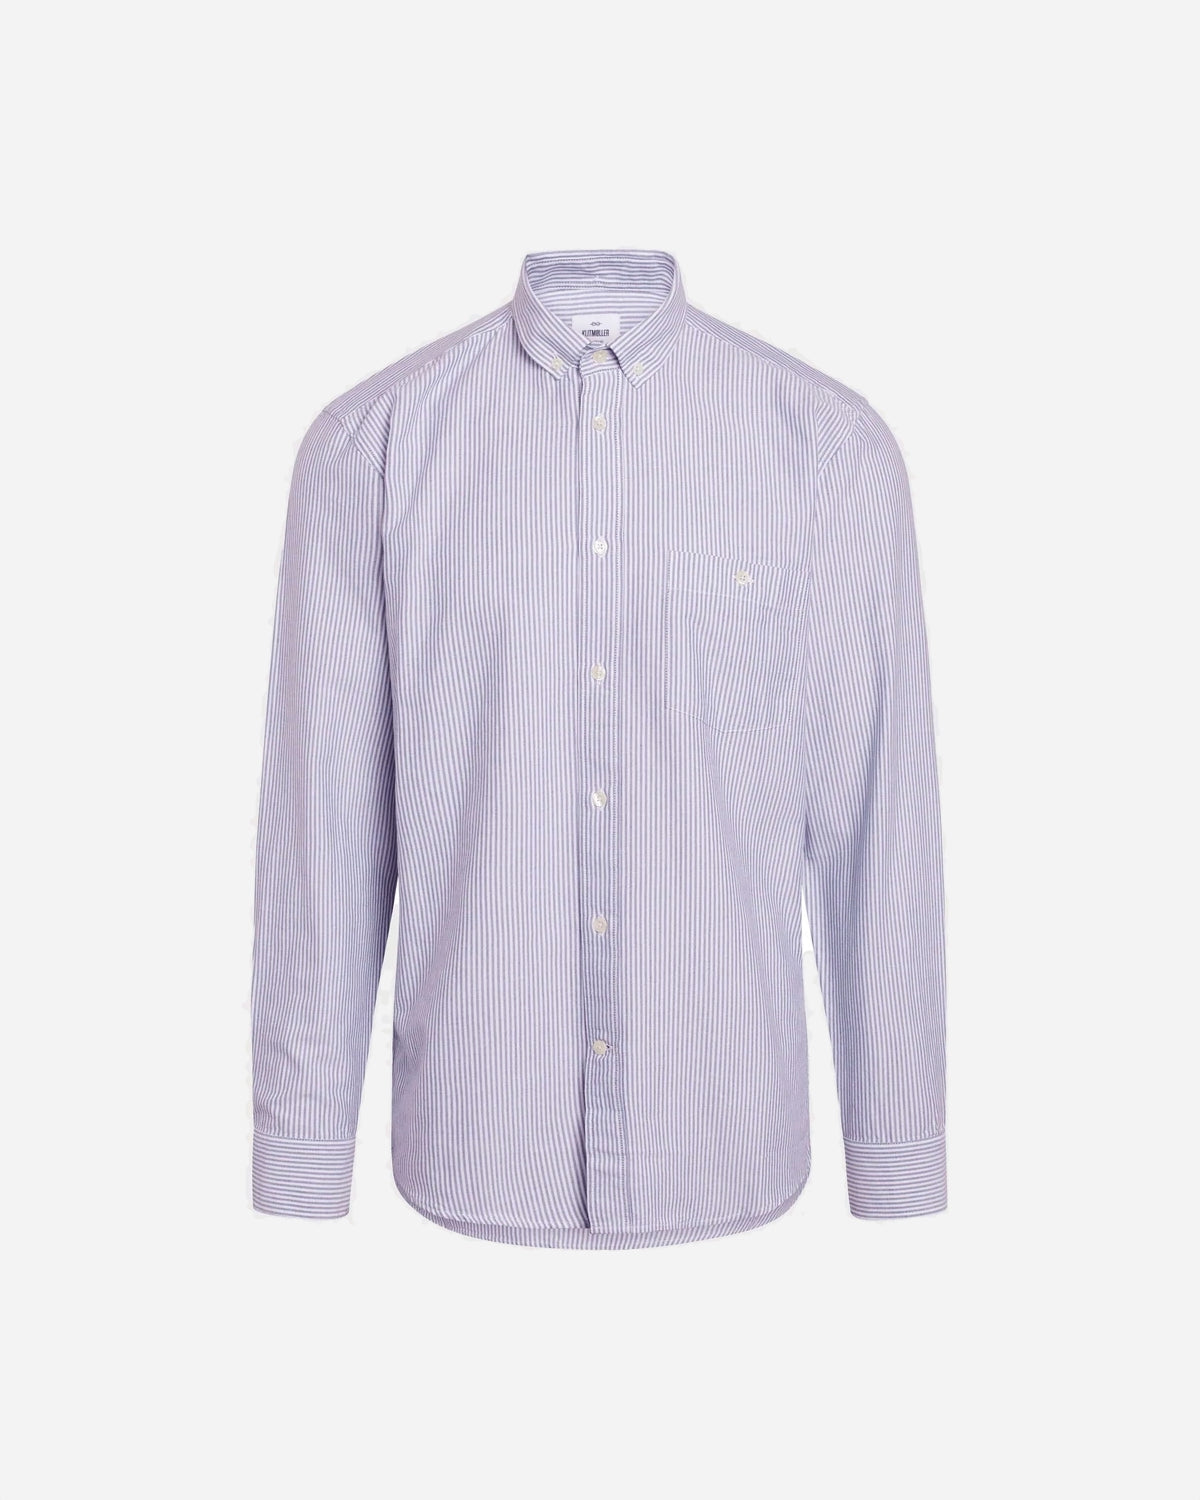 Benjamin Striped Shirt - White/Navy - Klitmøller Collective - Munkstore.dk